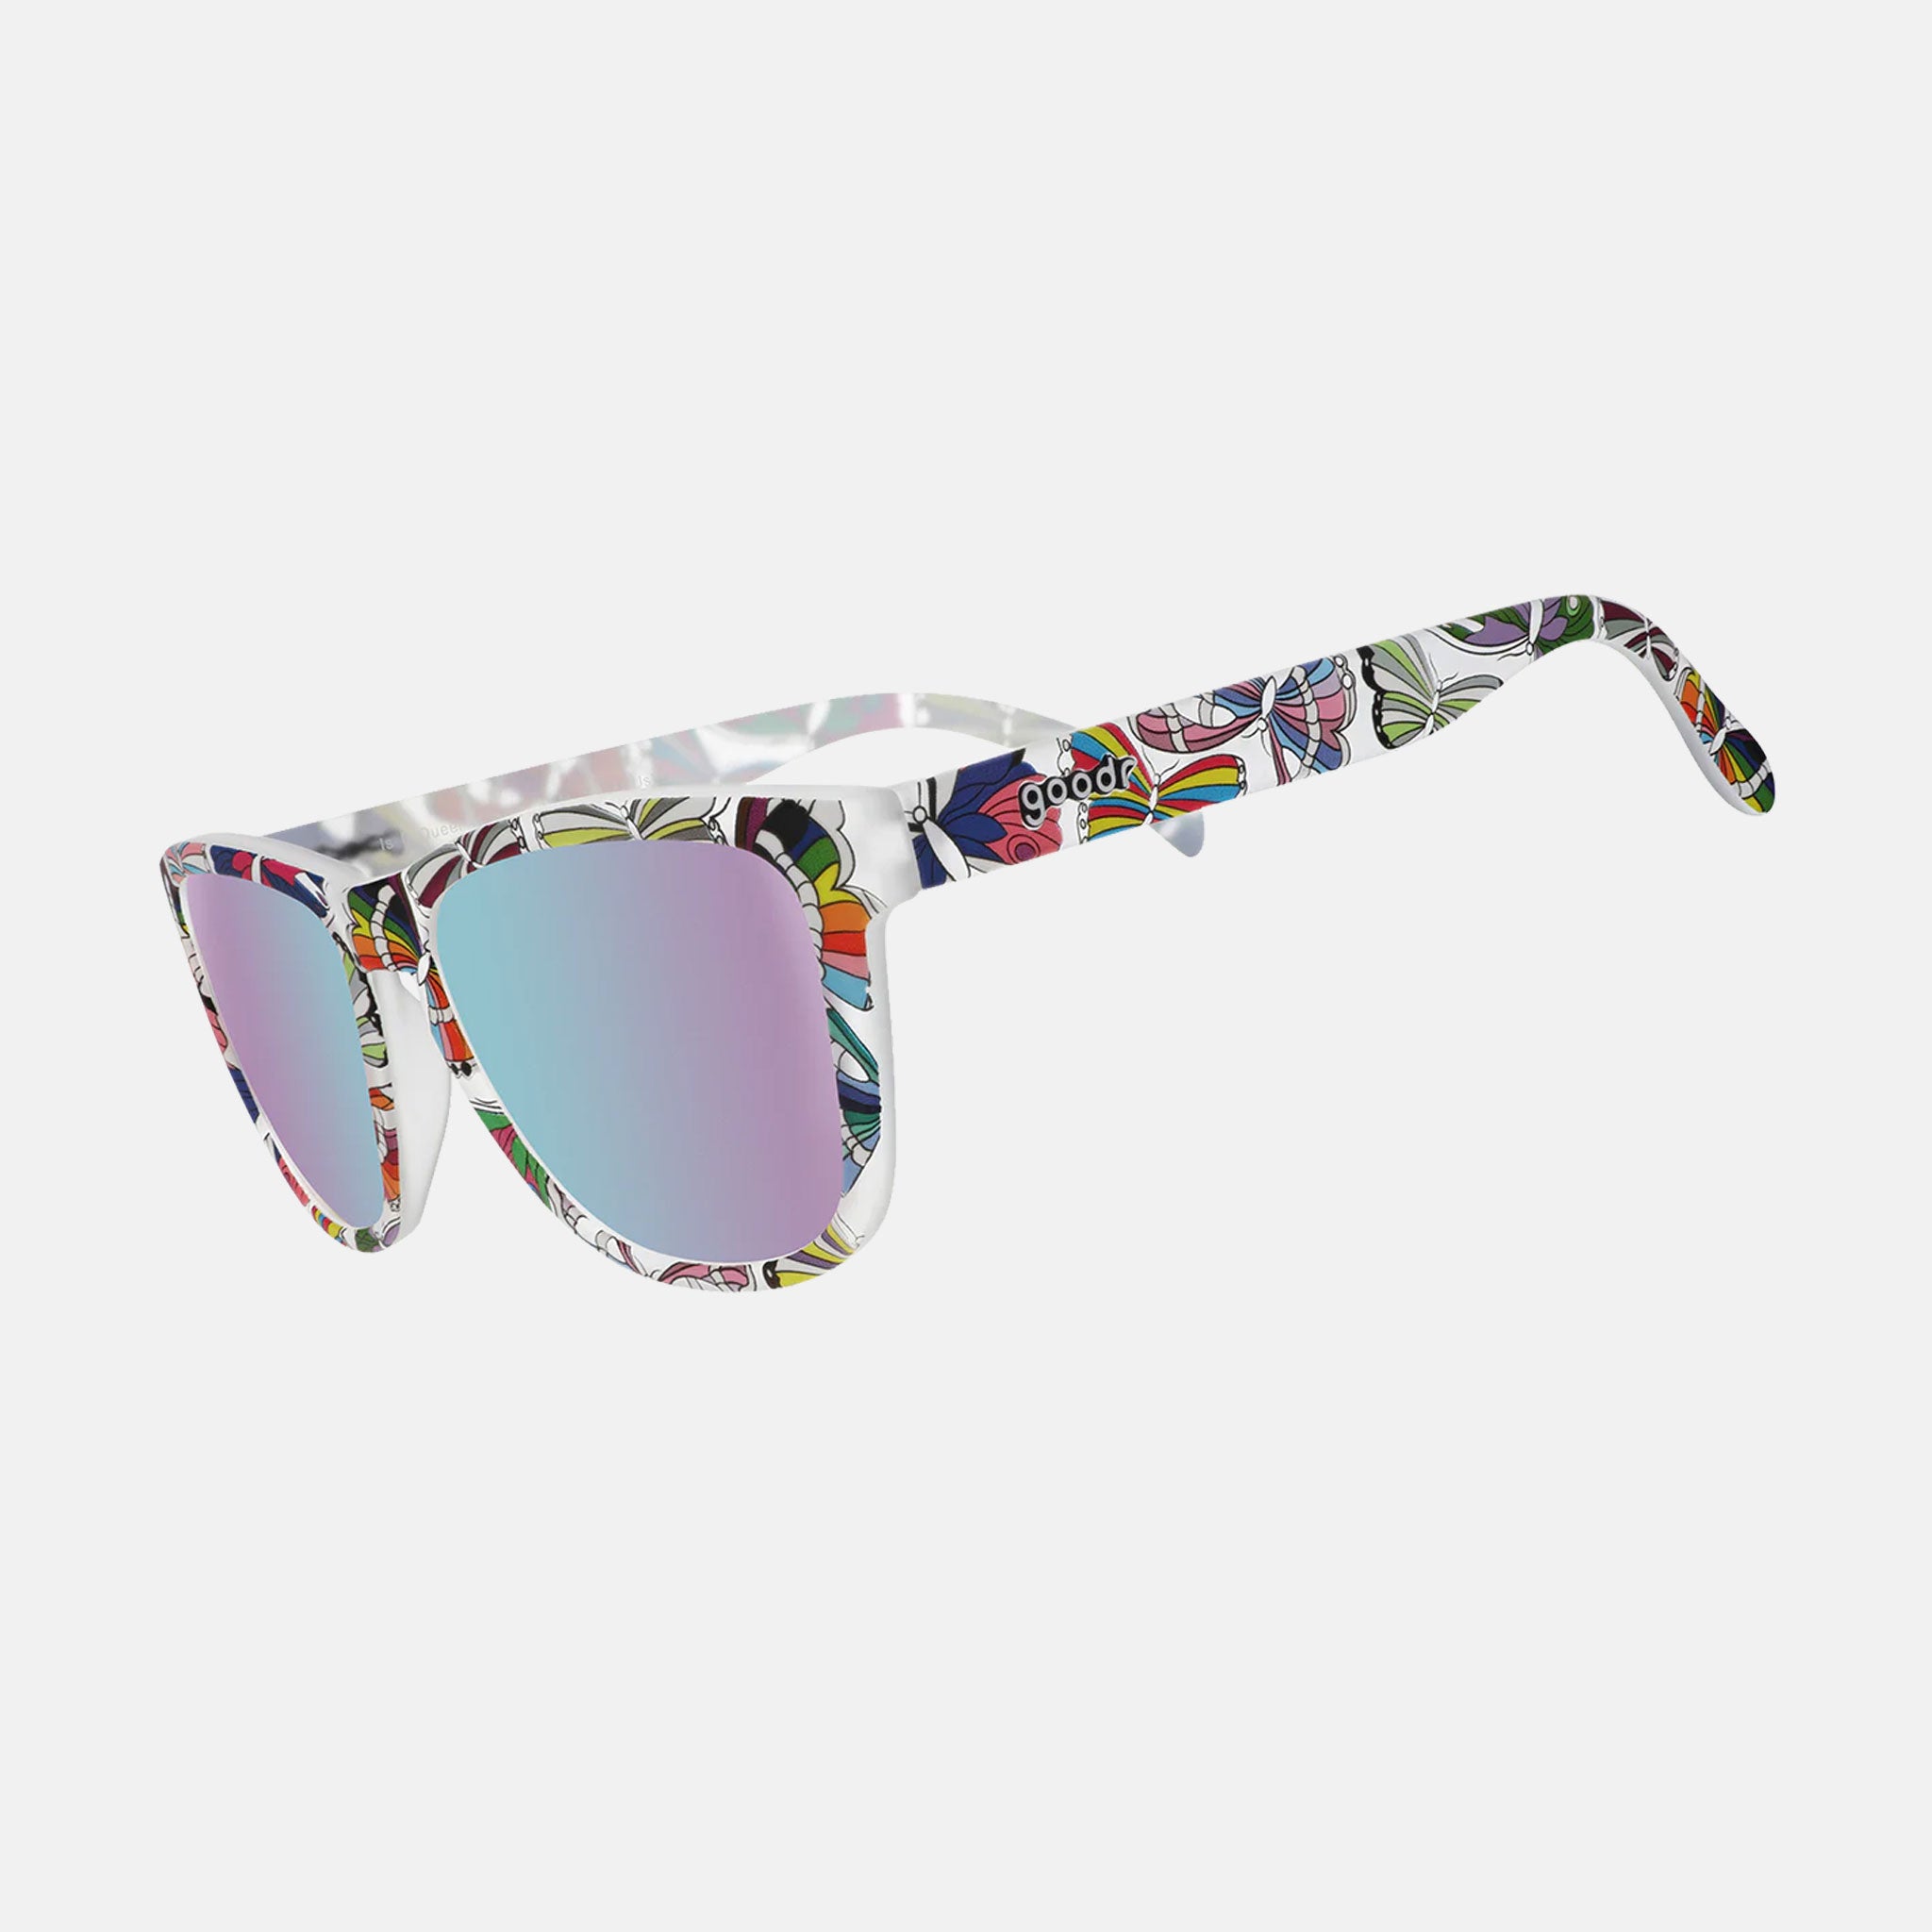 Goodr pride rainbow sunglasses